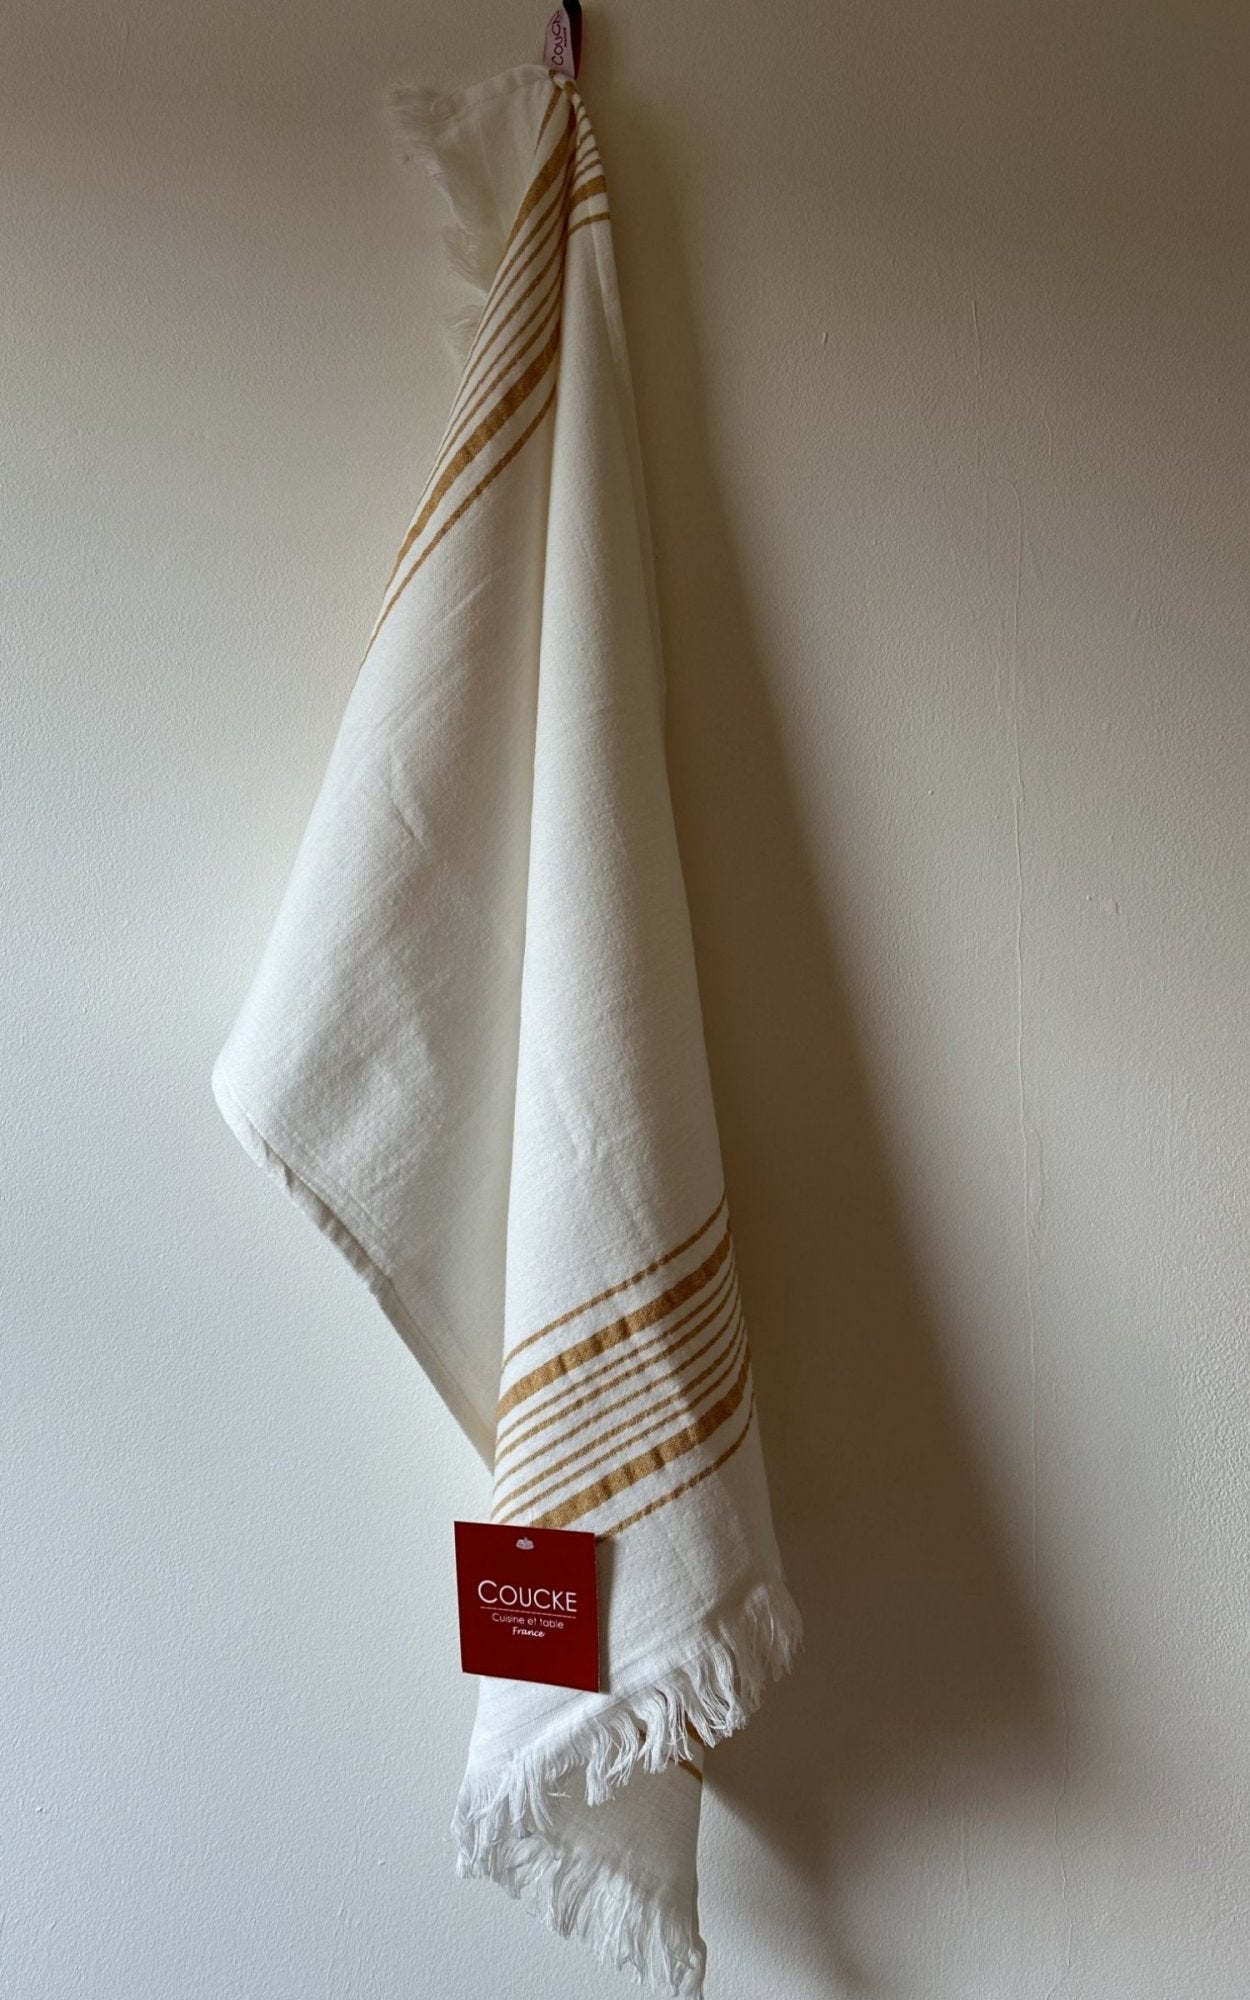 Coucke "Bise Safran", Woven cotton tea towel. Designed in France.